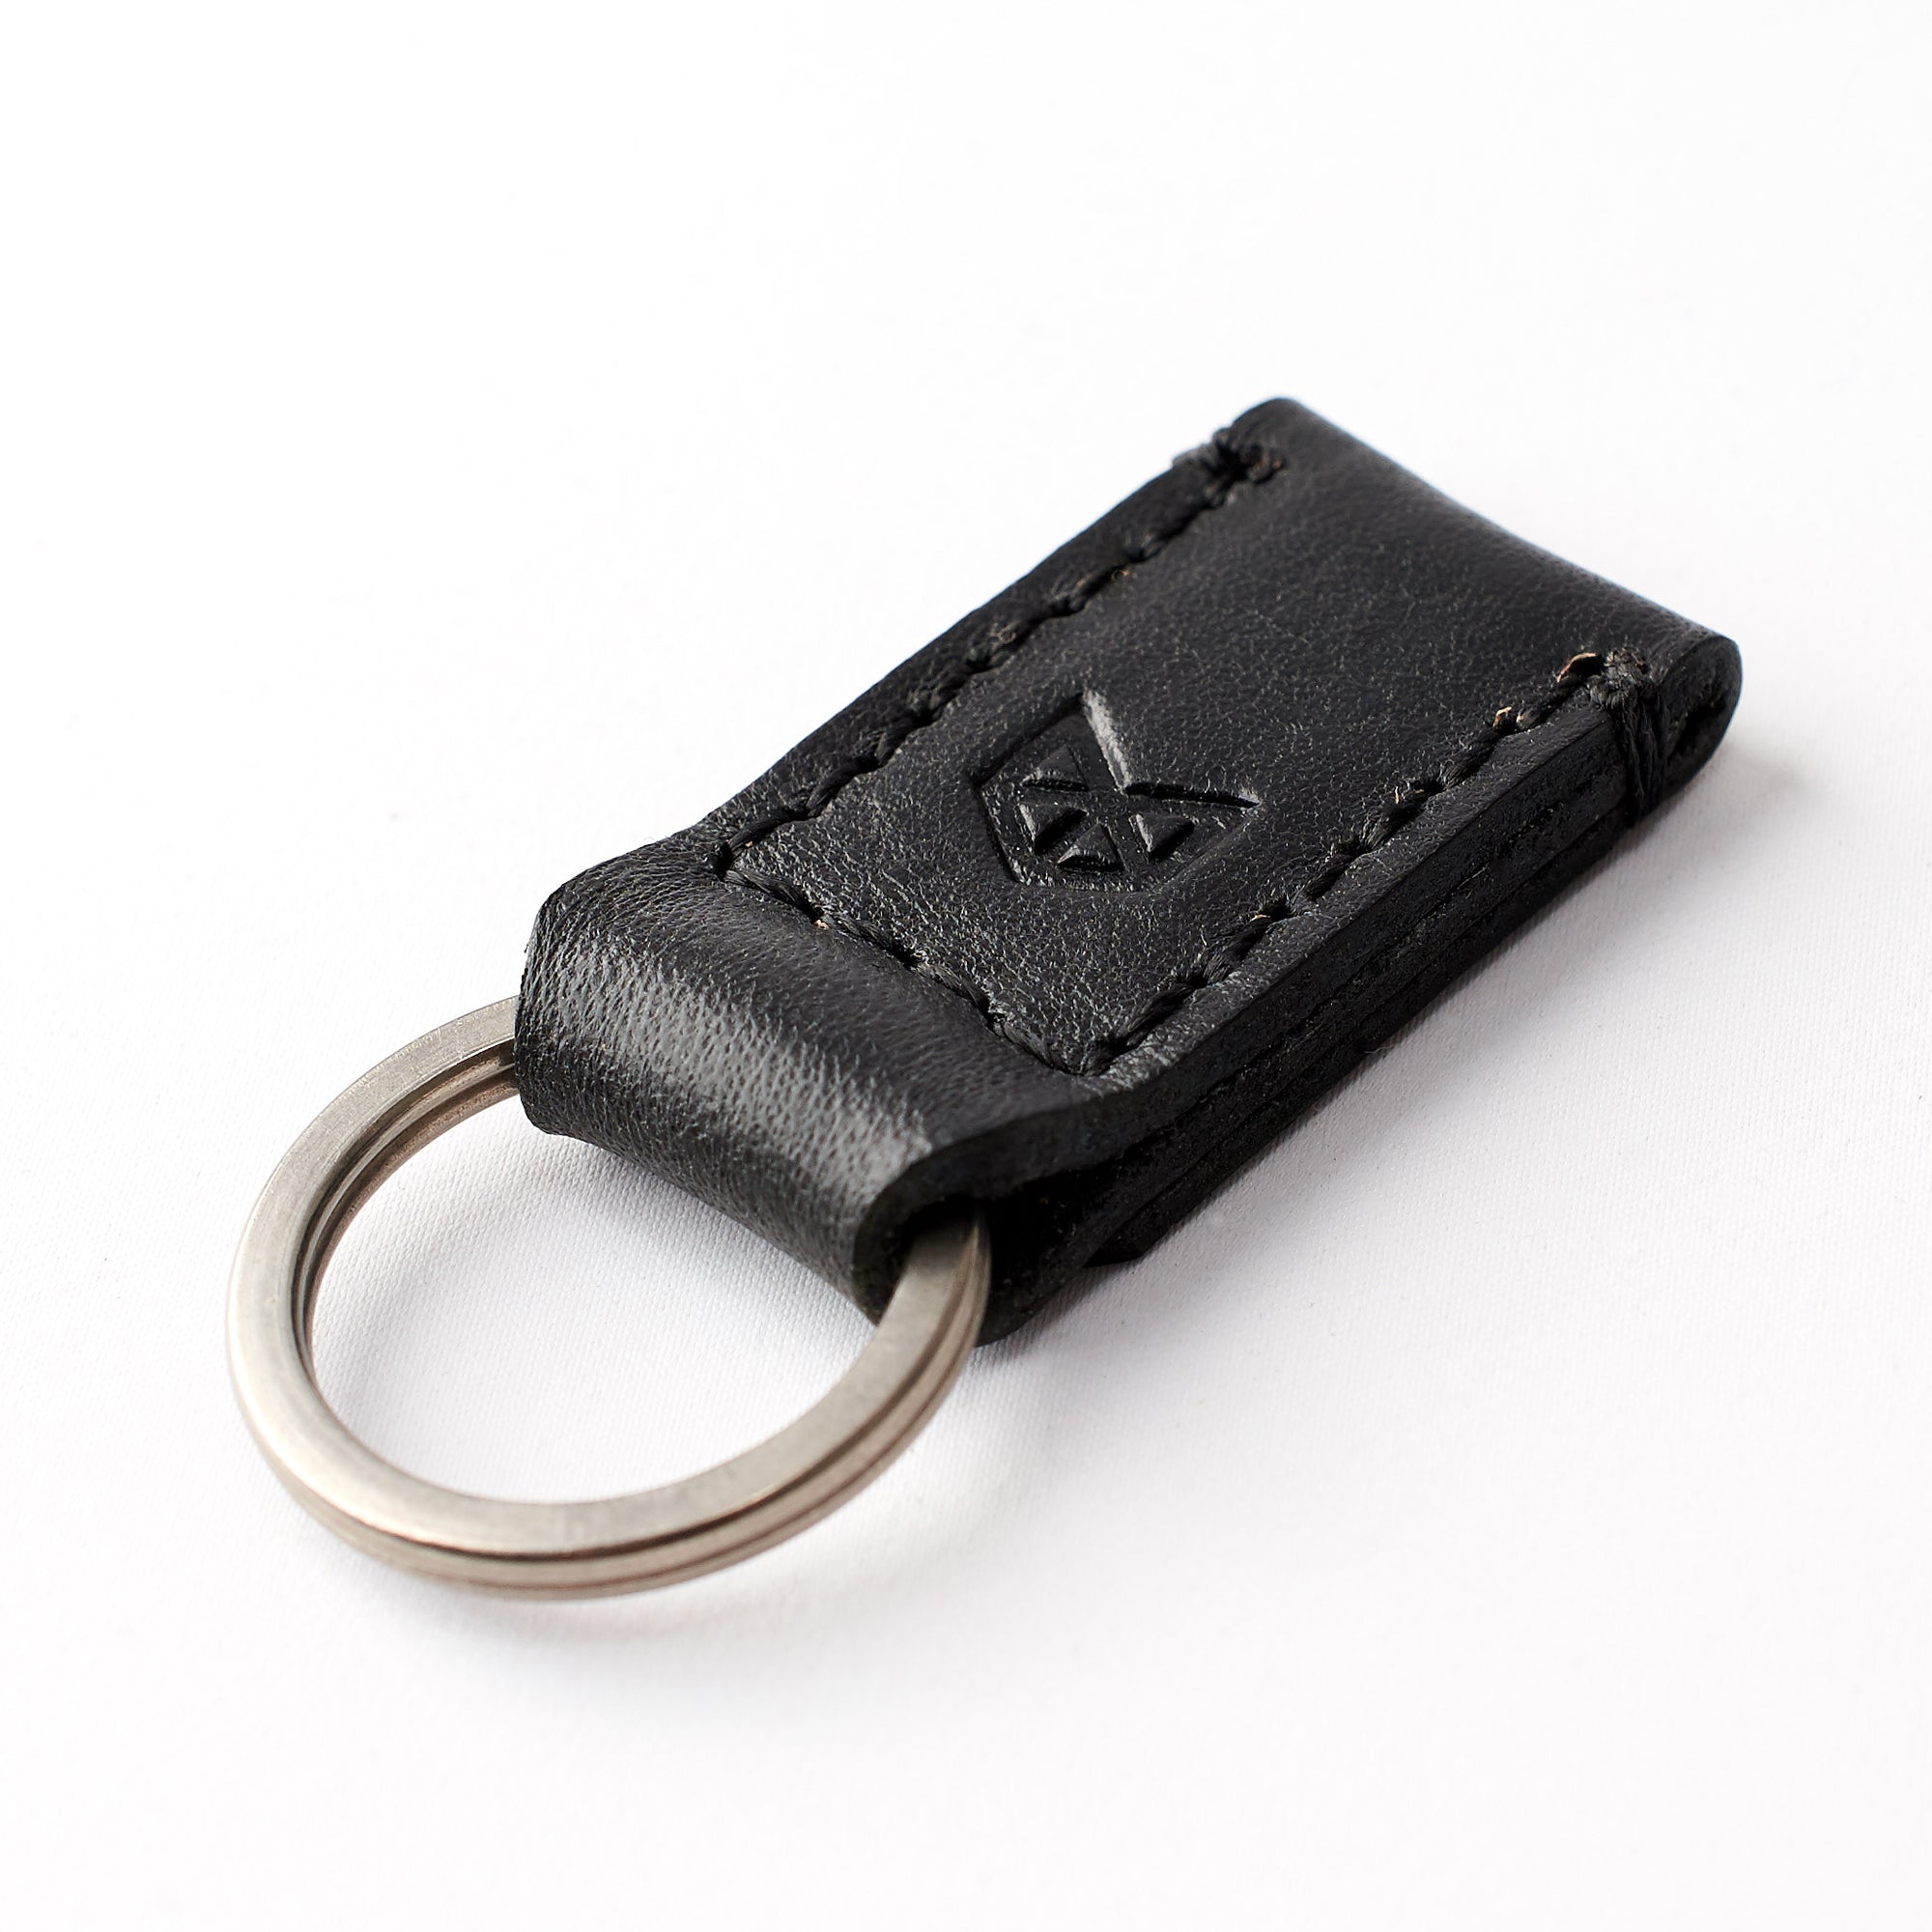 Black leather magnetic keychain, custom magnetic key fob